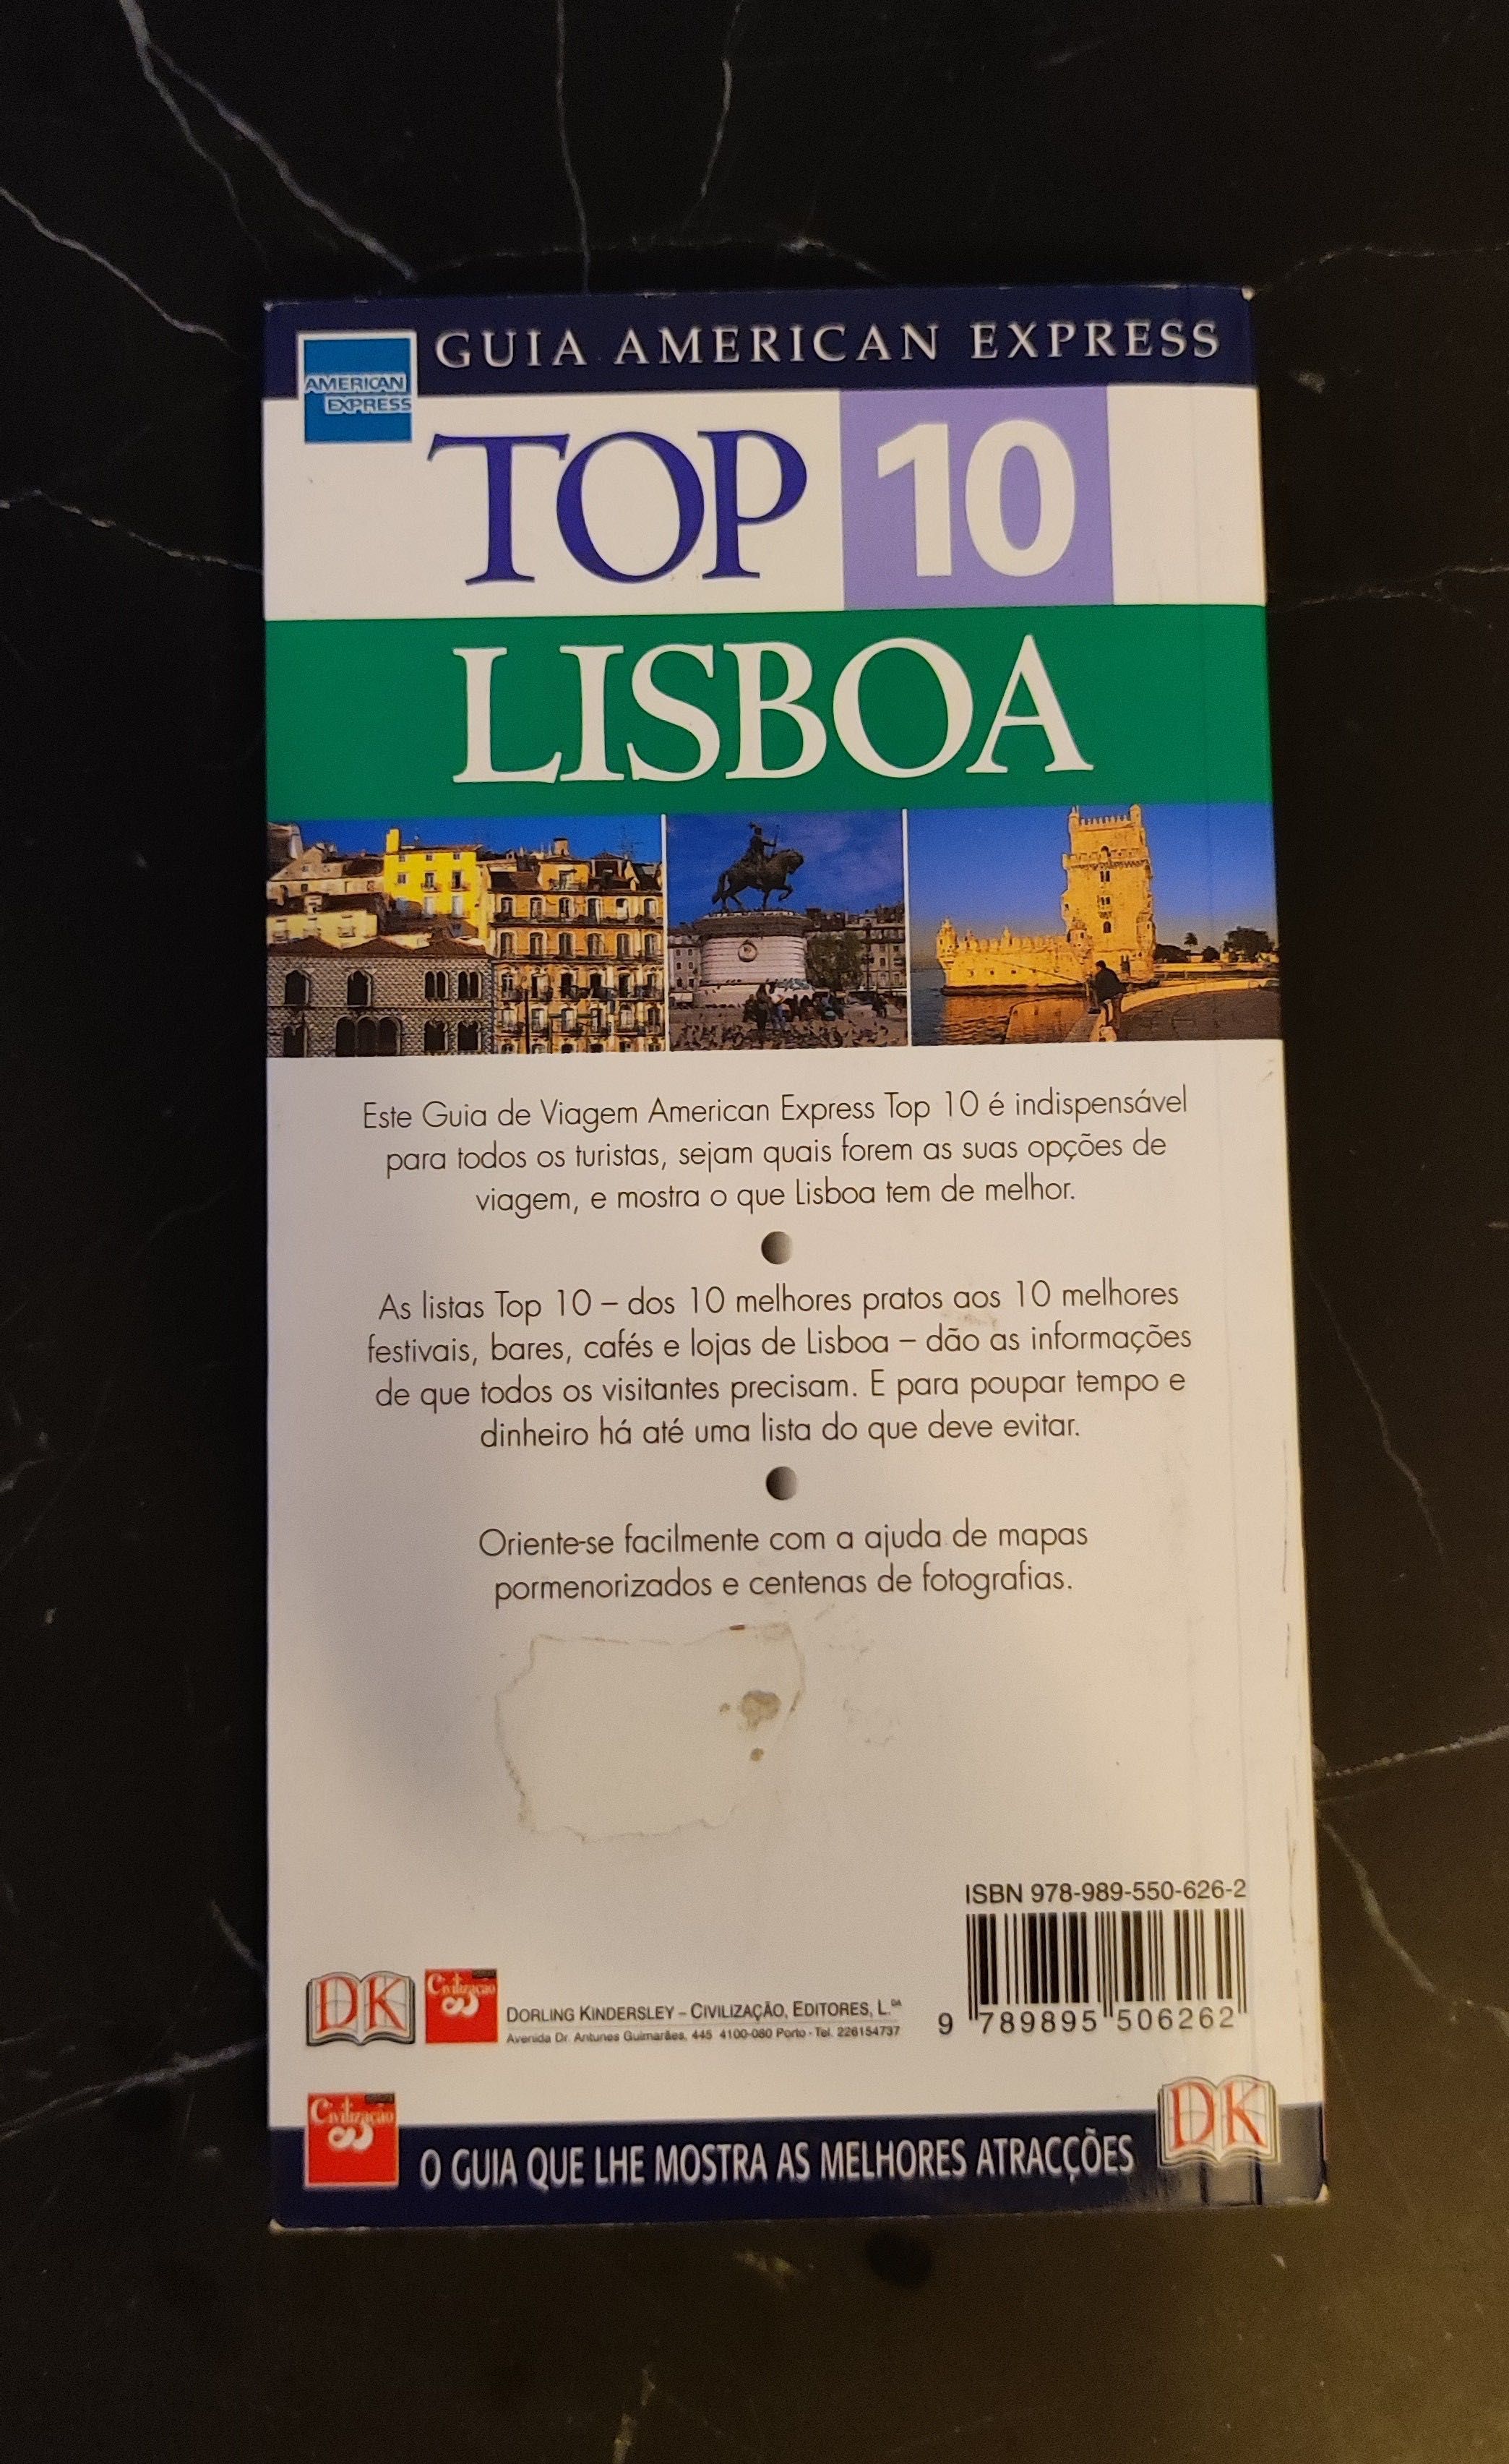 Guia American Express - Top 10 - Lisboa